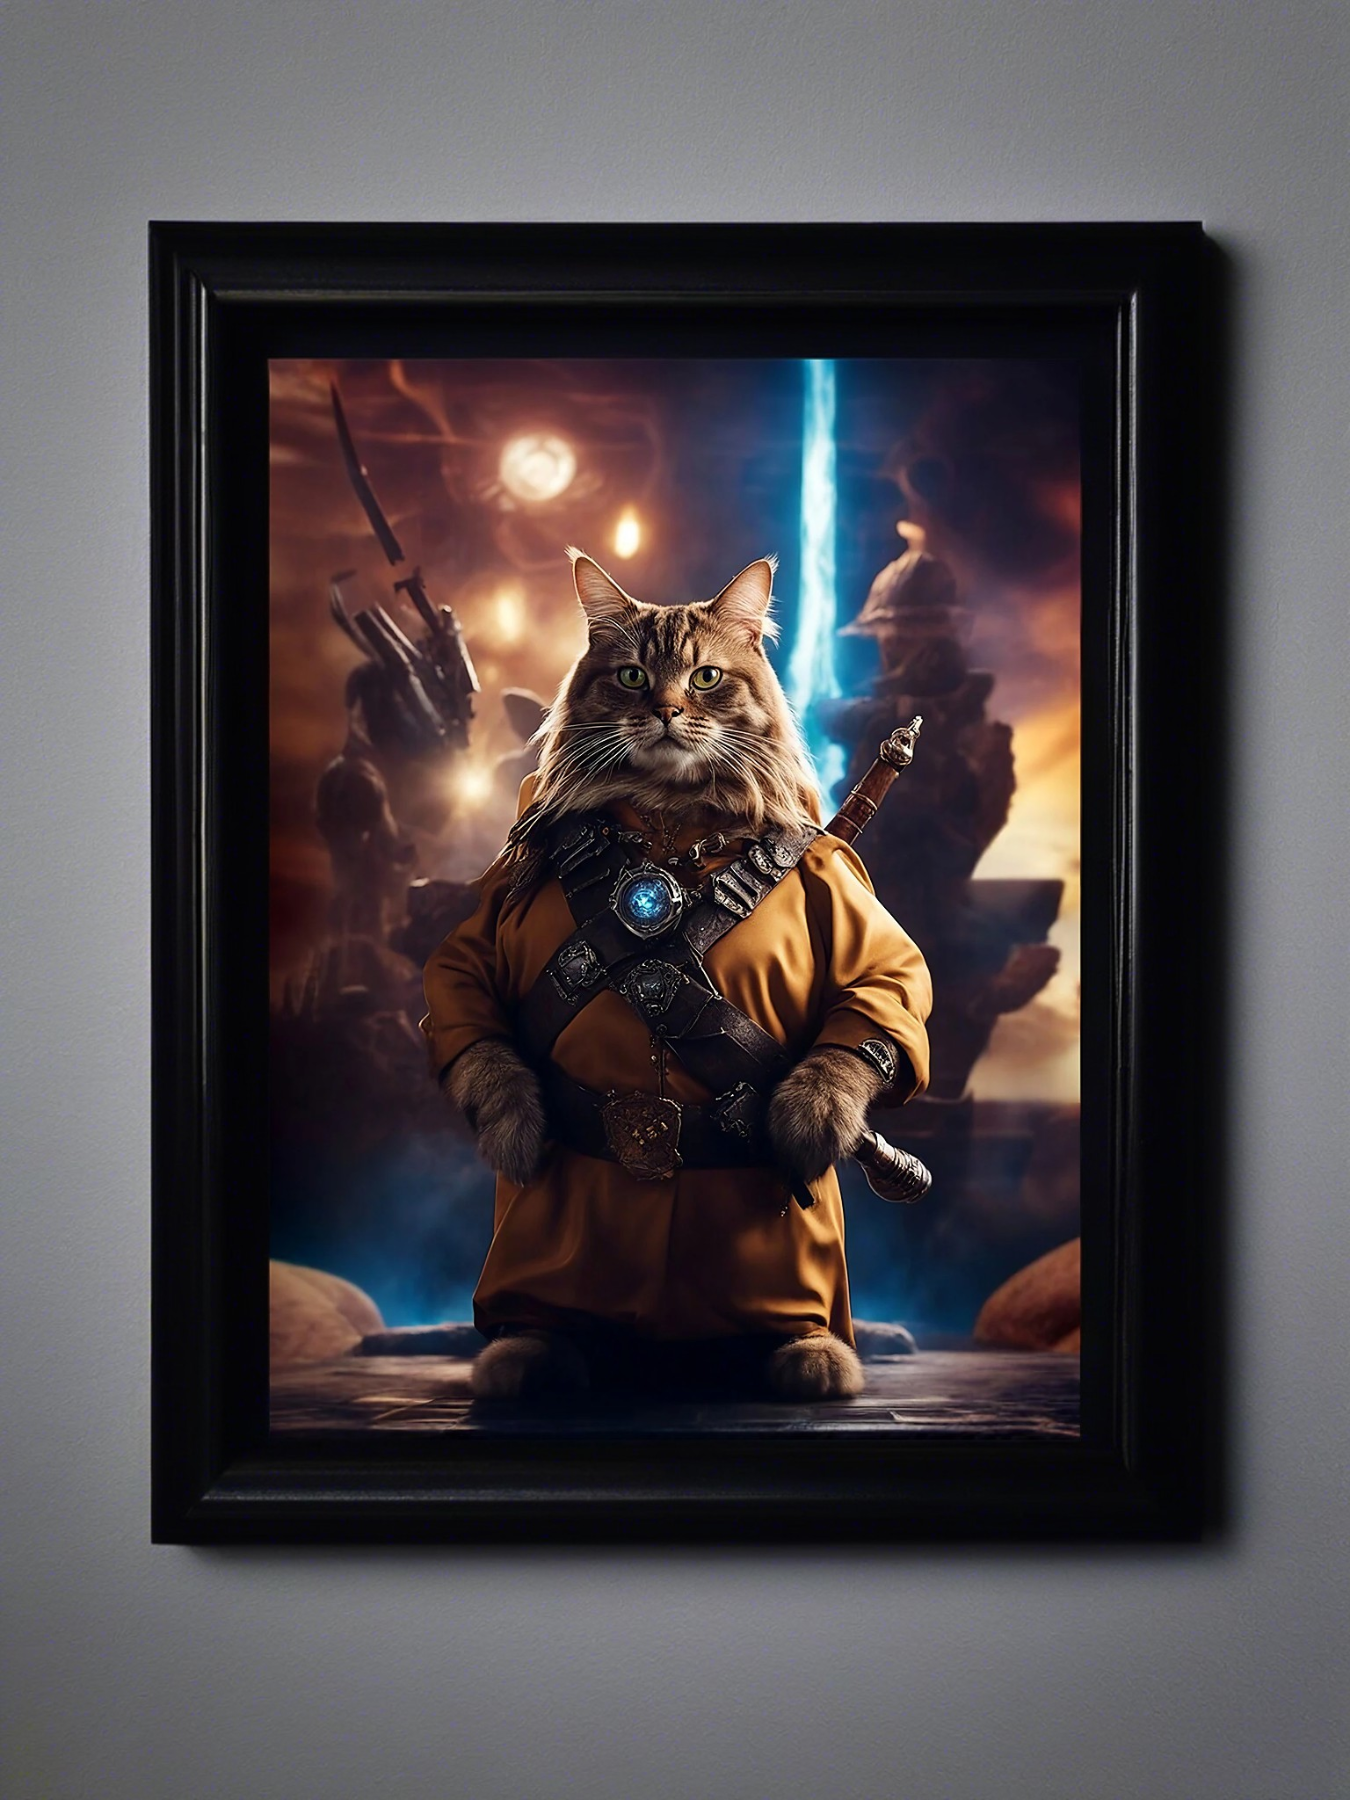 Hero cat science fiction mini photo poster - 27x20 cm 3